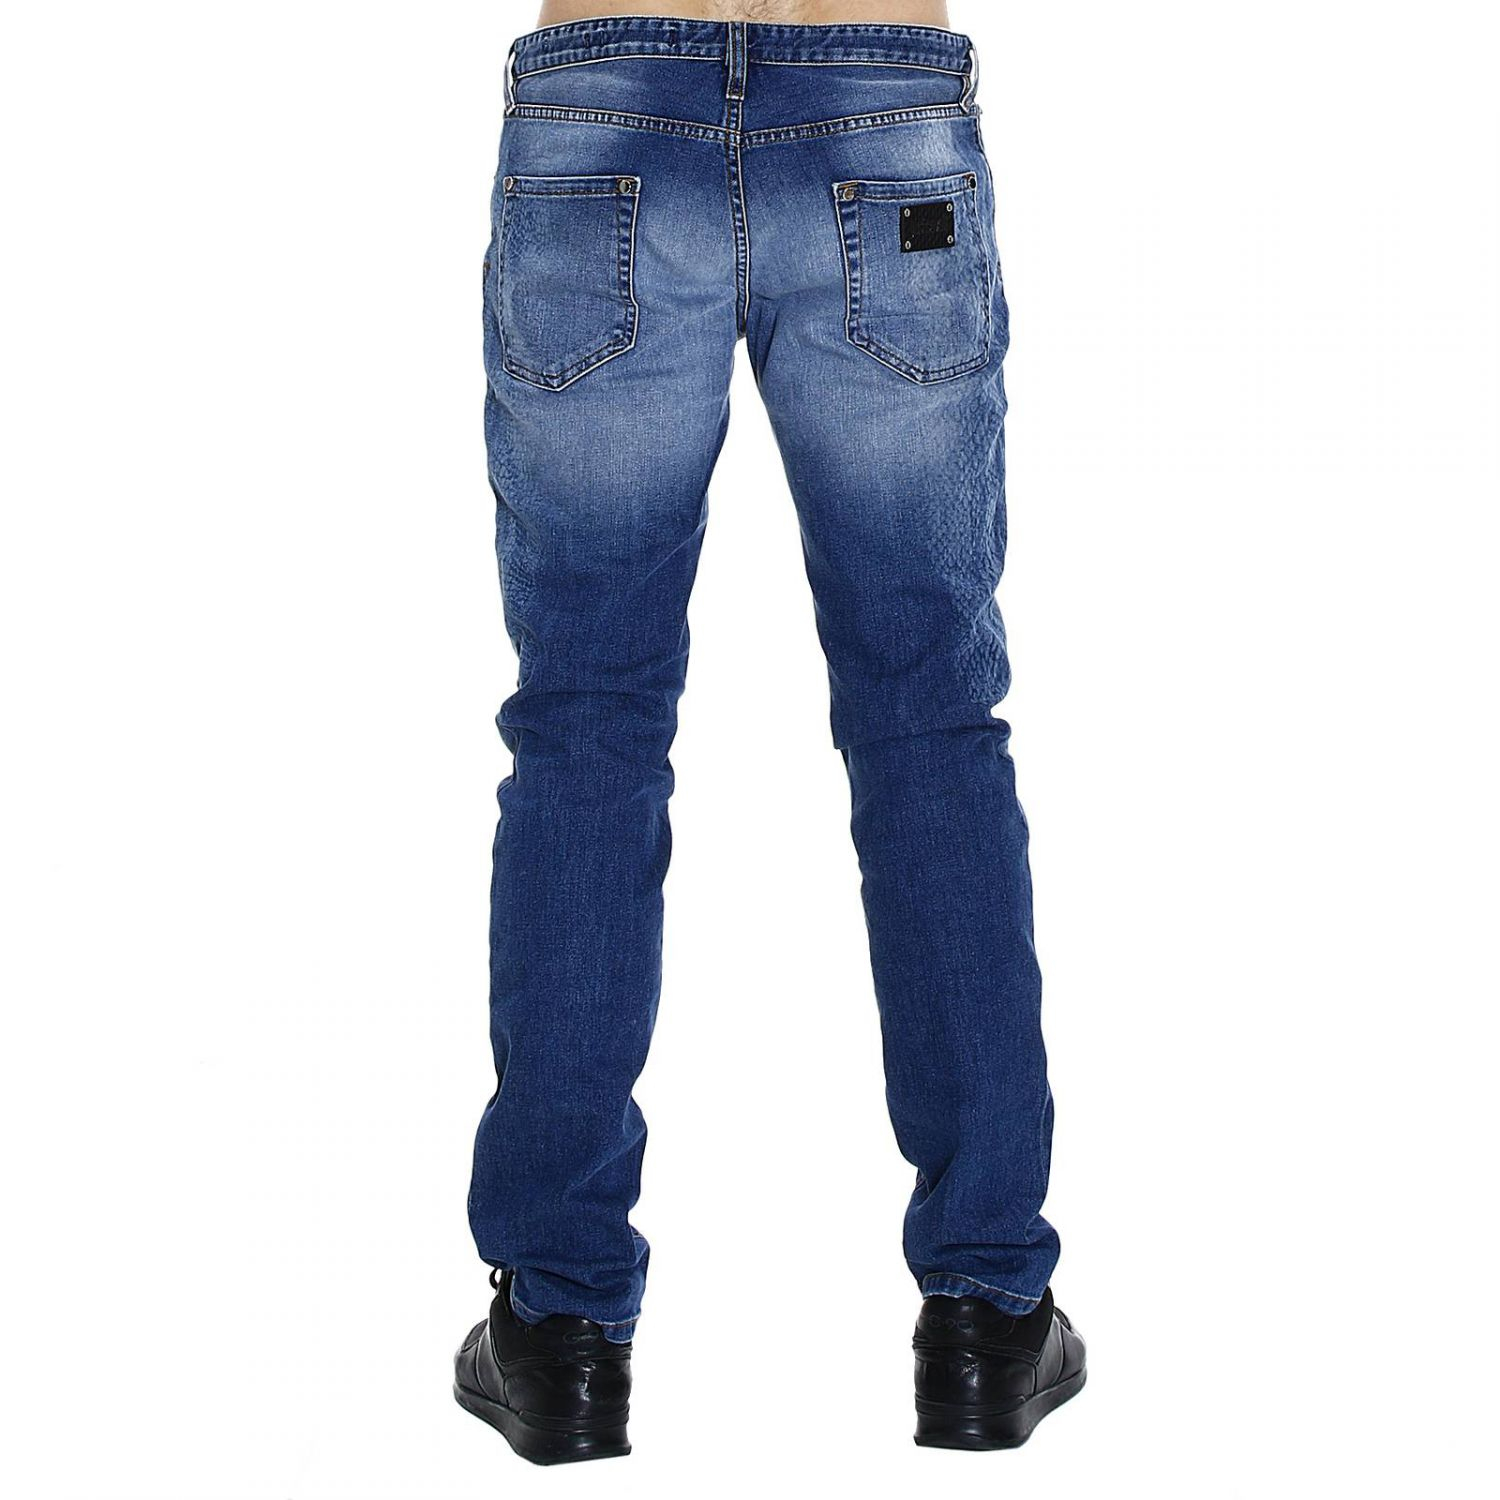 Lyst - Roberto Cavalli Jeans Man in Blue for Men